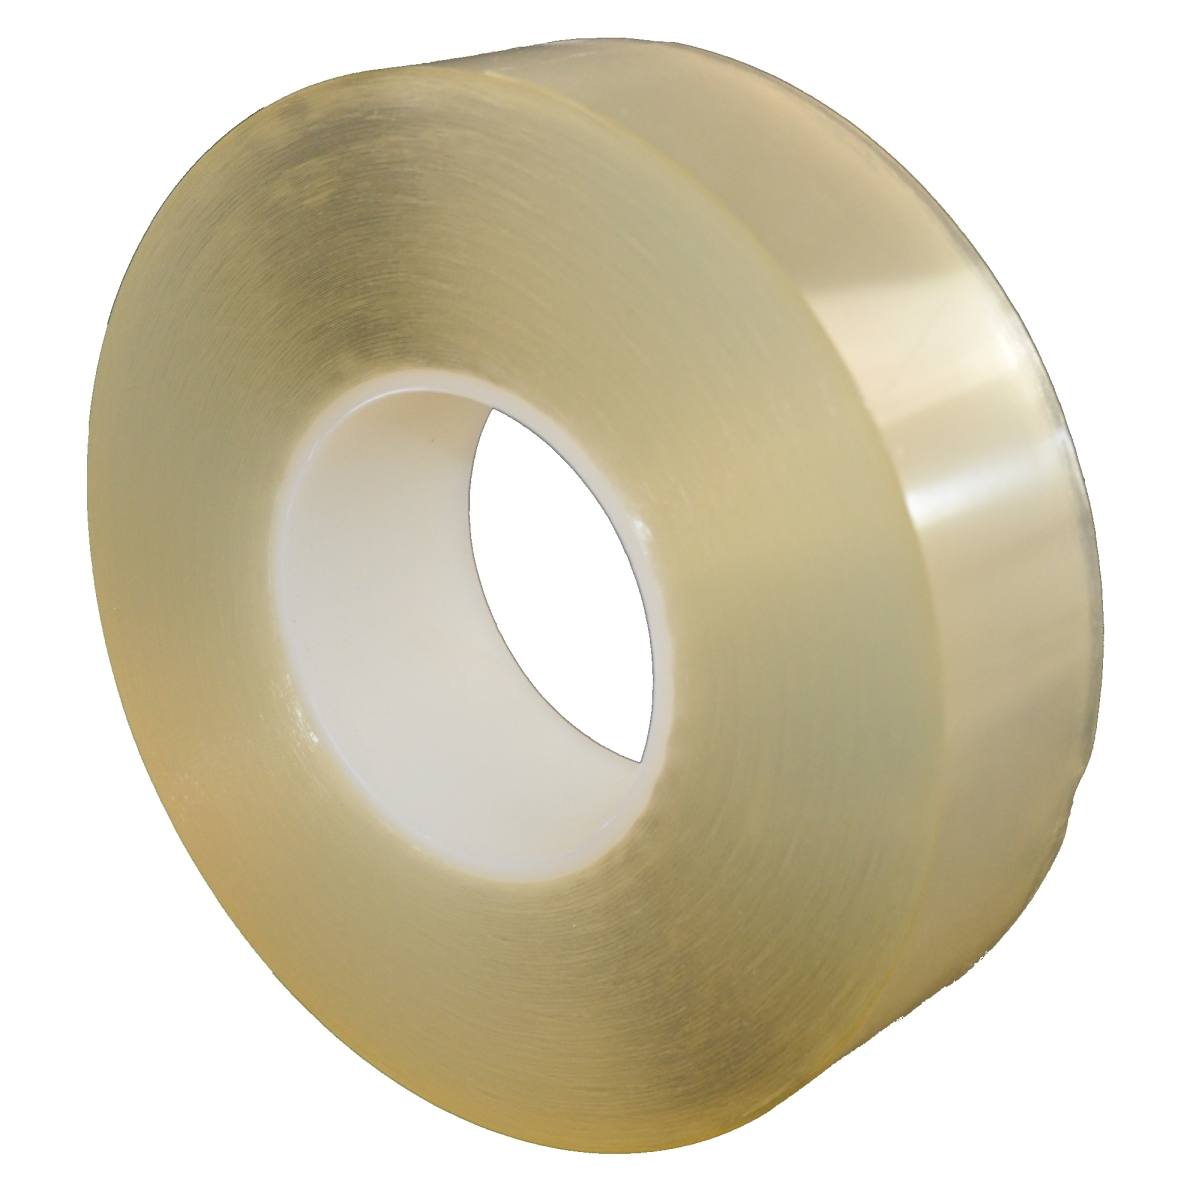 S-K-S transfer adhesive tape 2283 LE20, transparent, 6 mm x 50 m, 0.30 mm